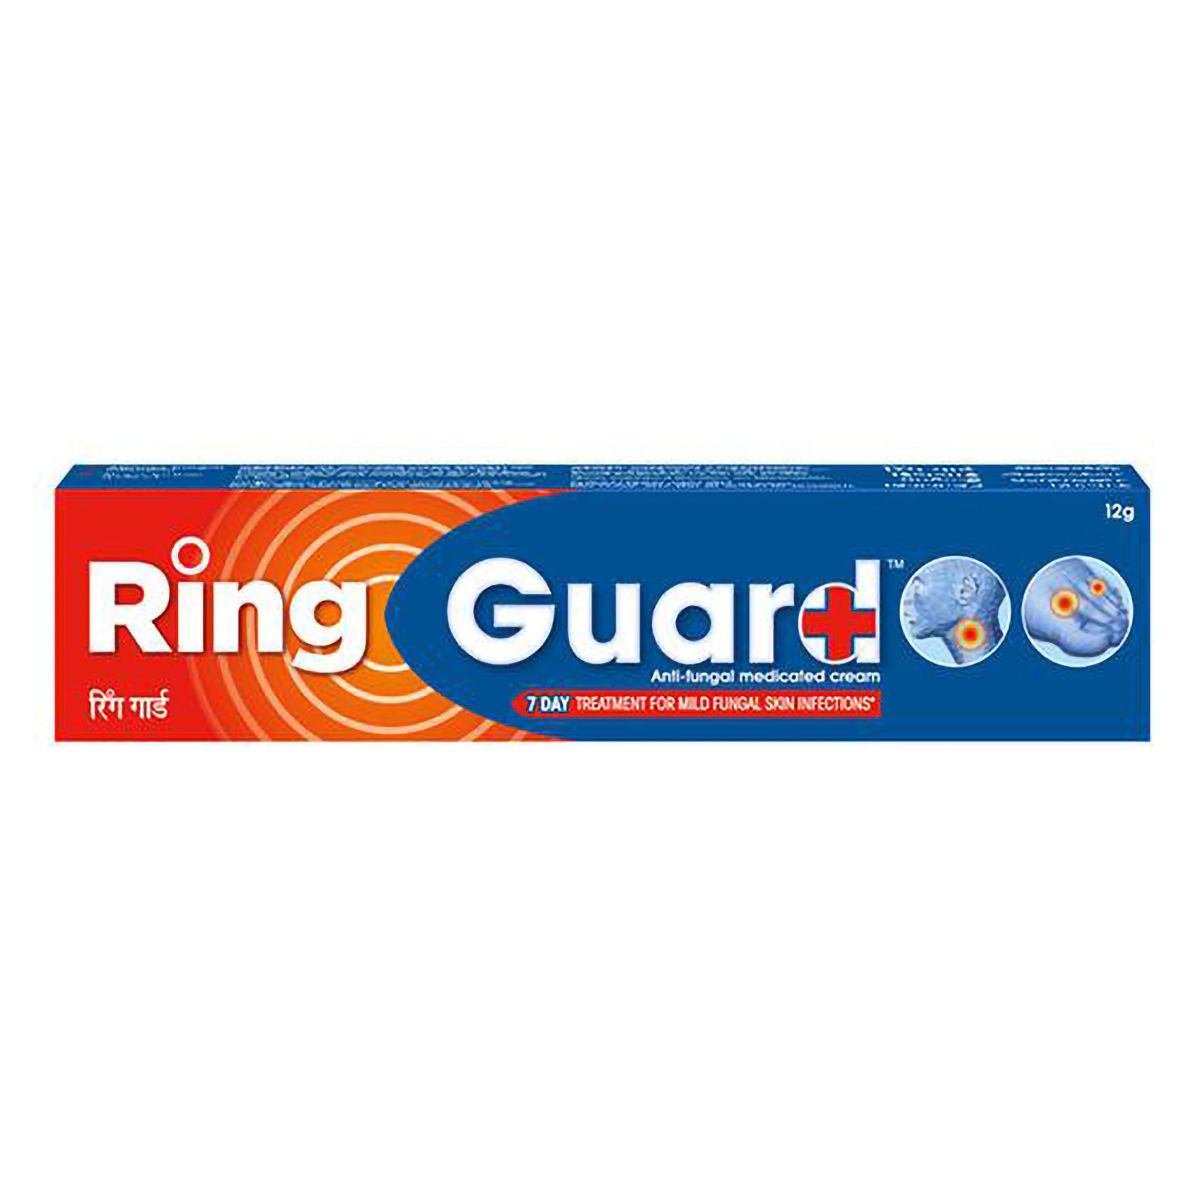 Buy Ring Guard Antifungal Medicated Cream, 12 gm Online